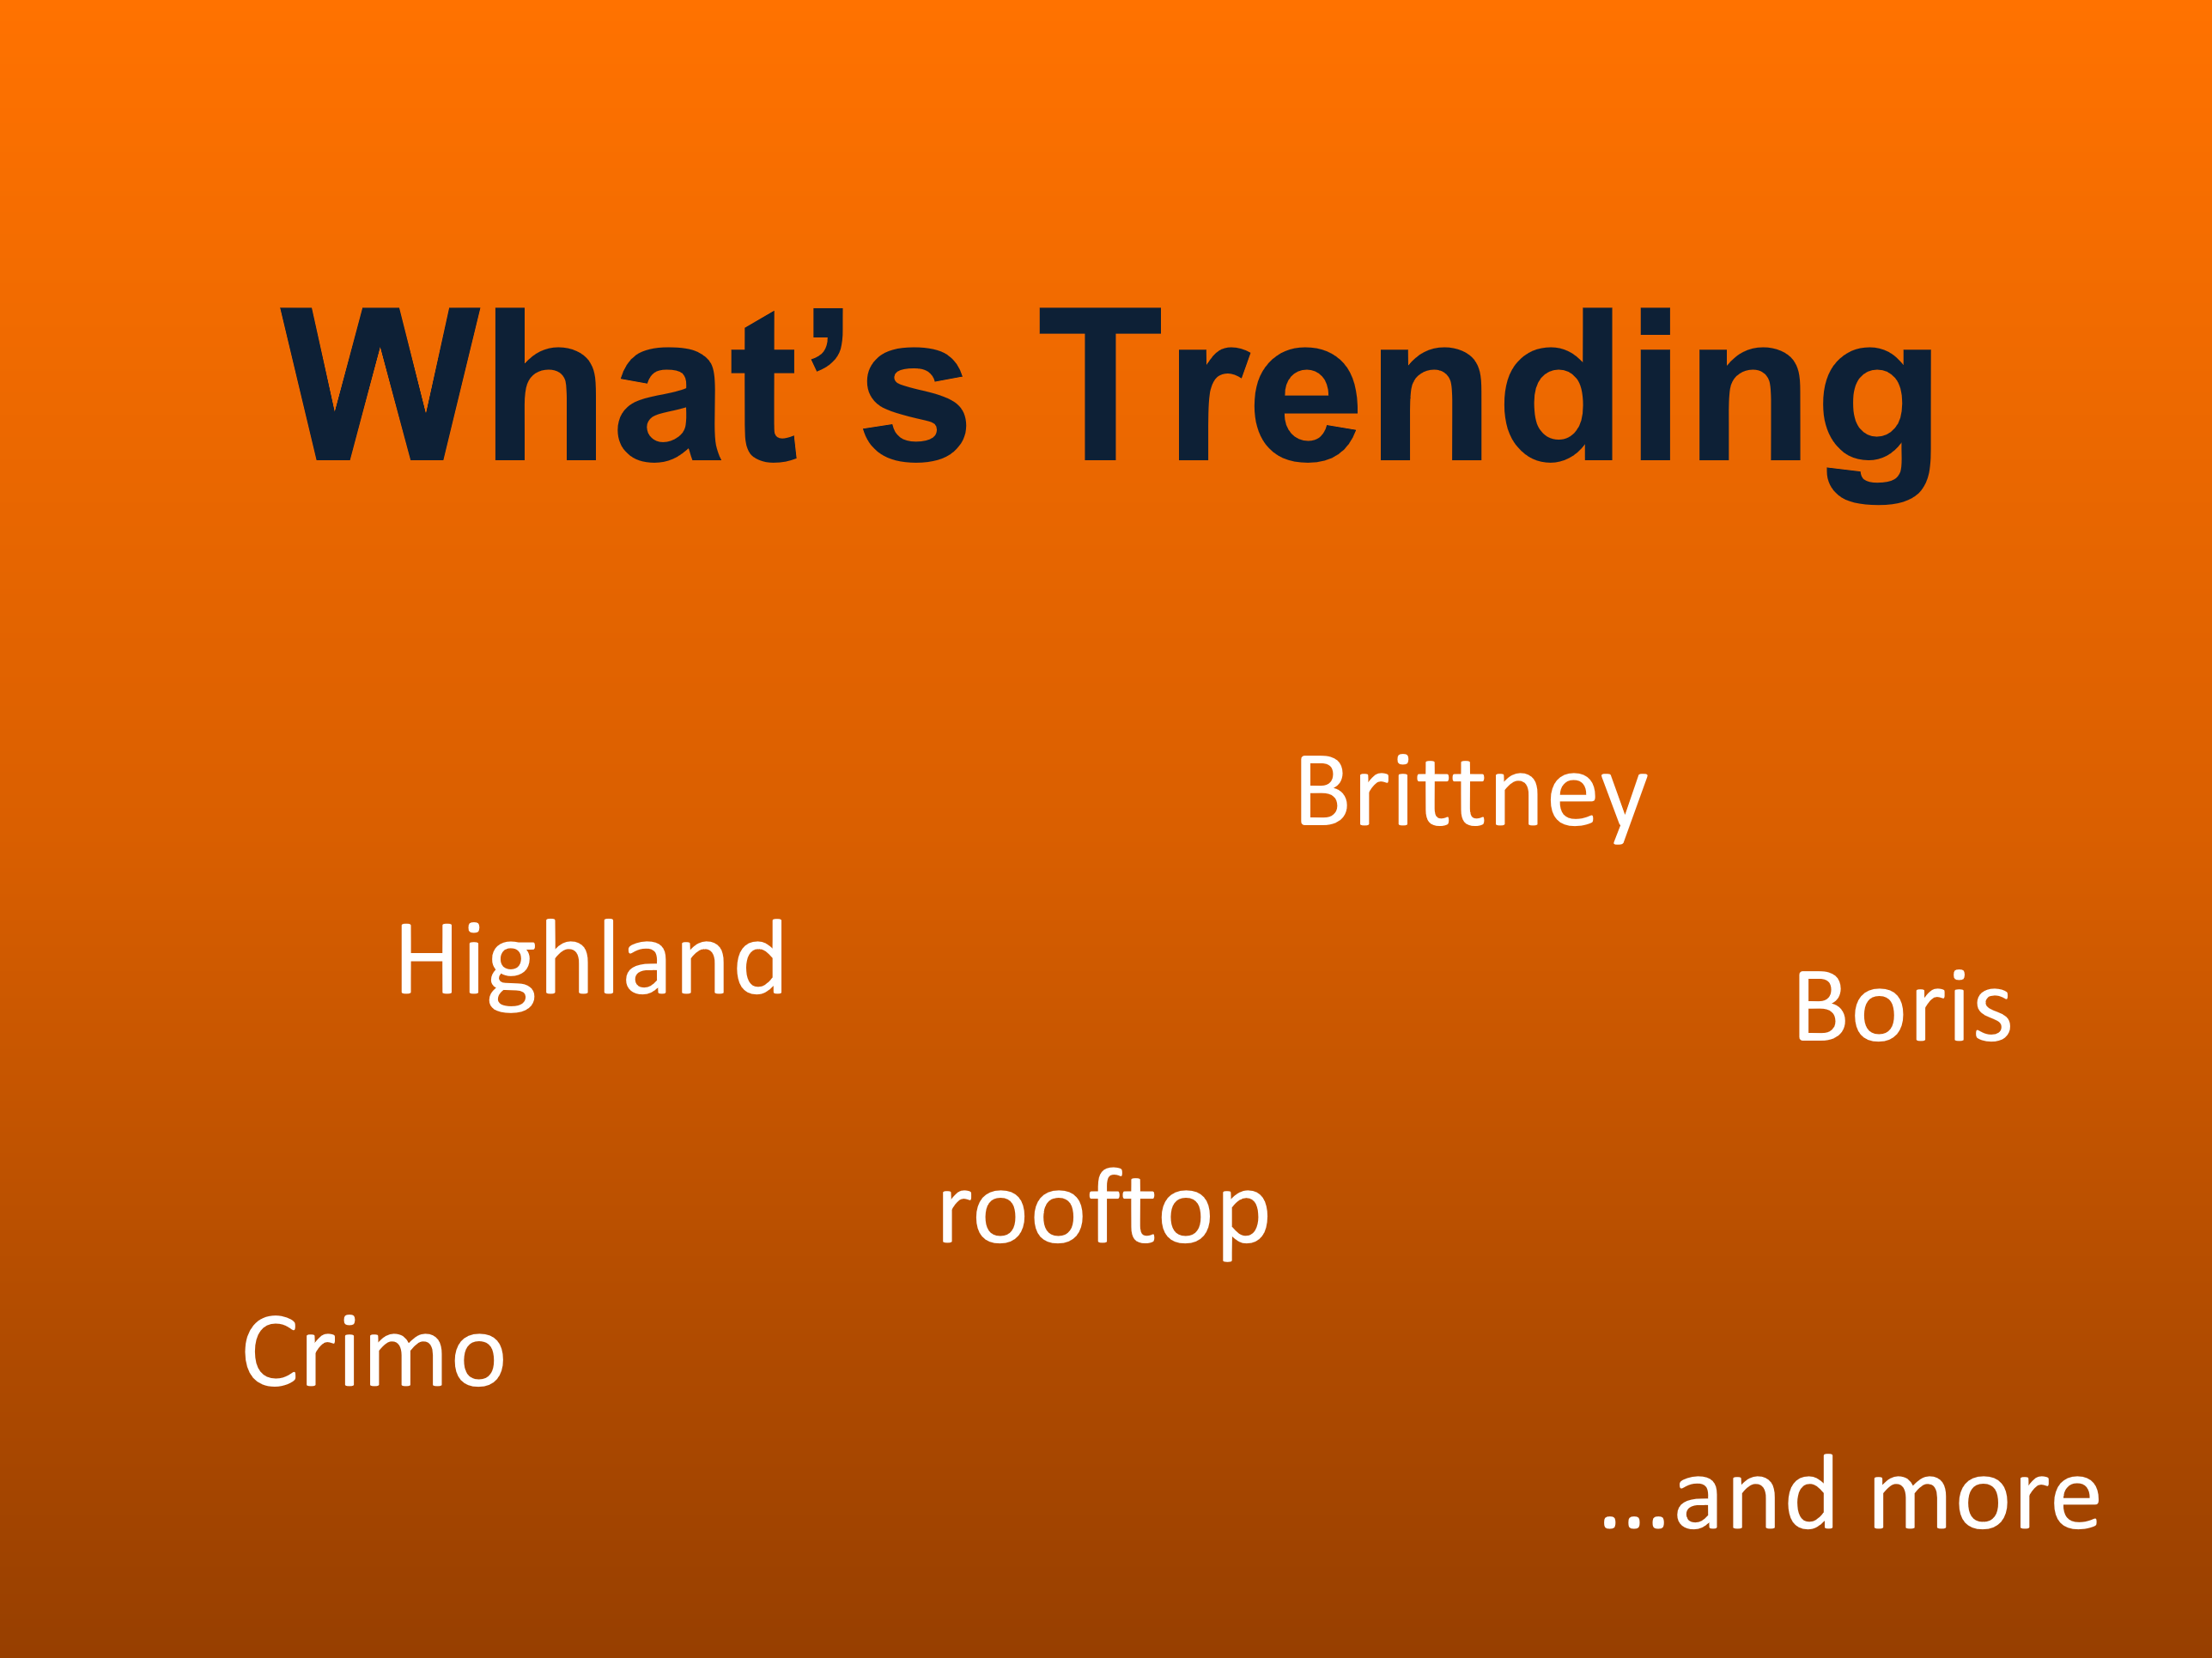 7/8/22 What's trending this week?